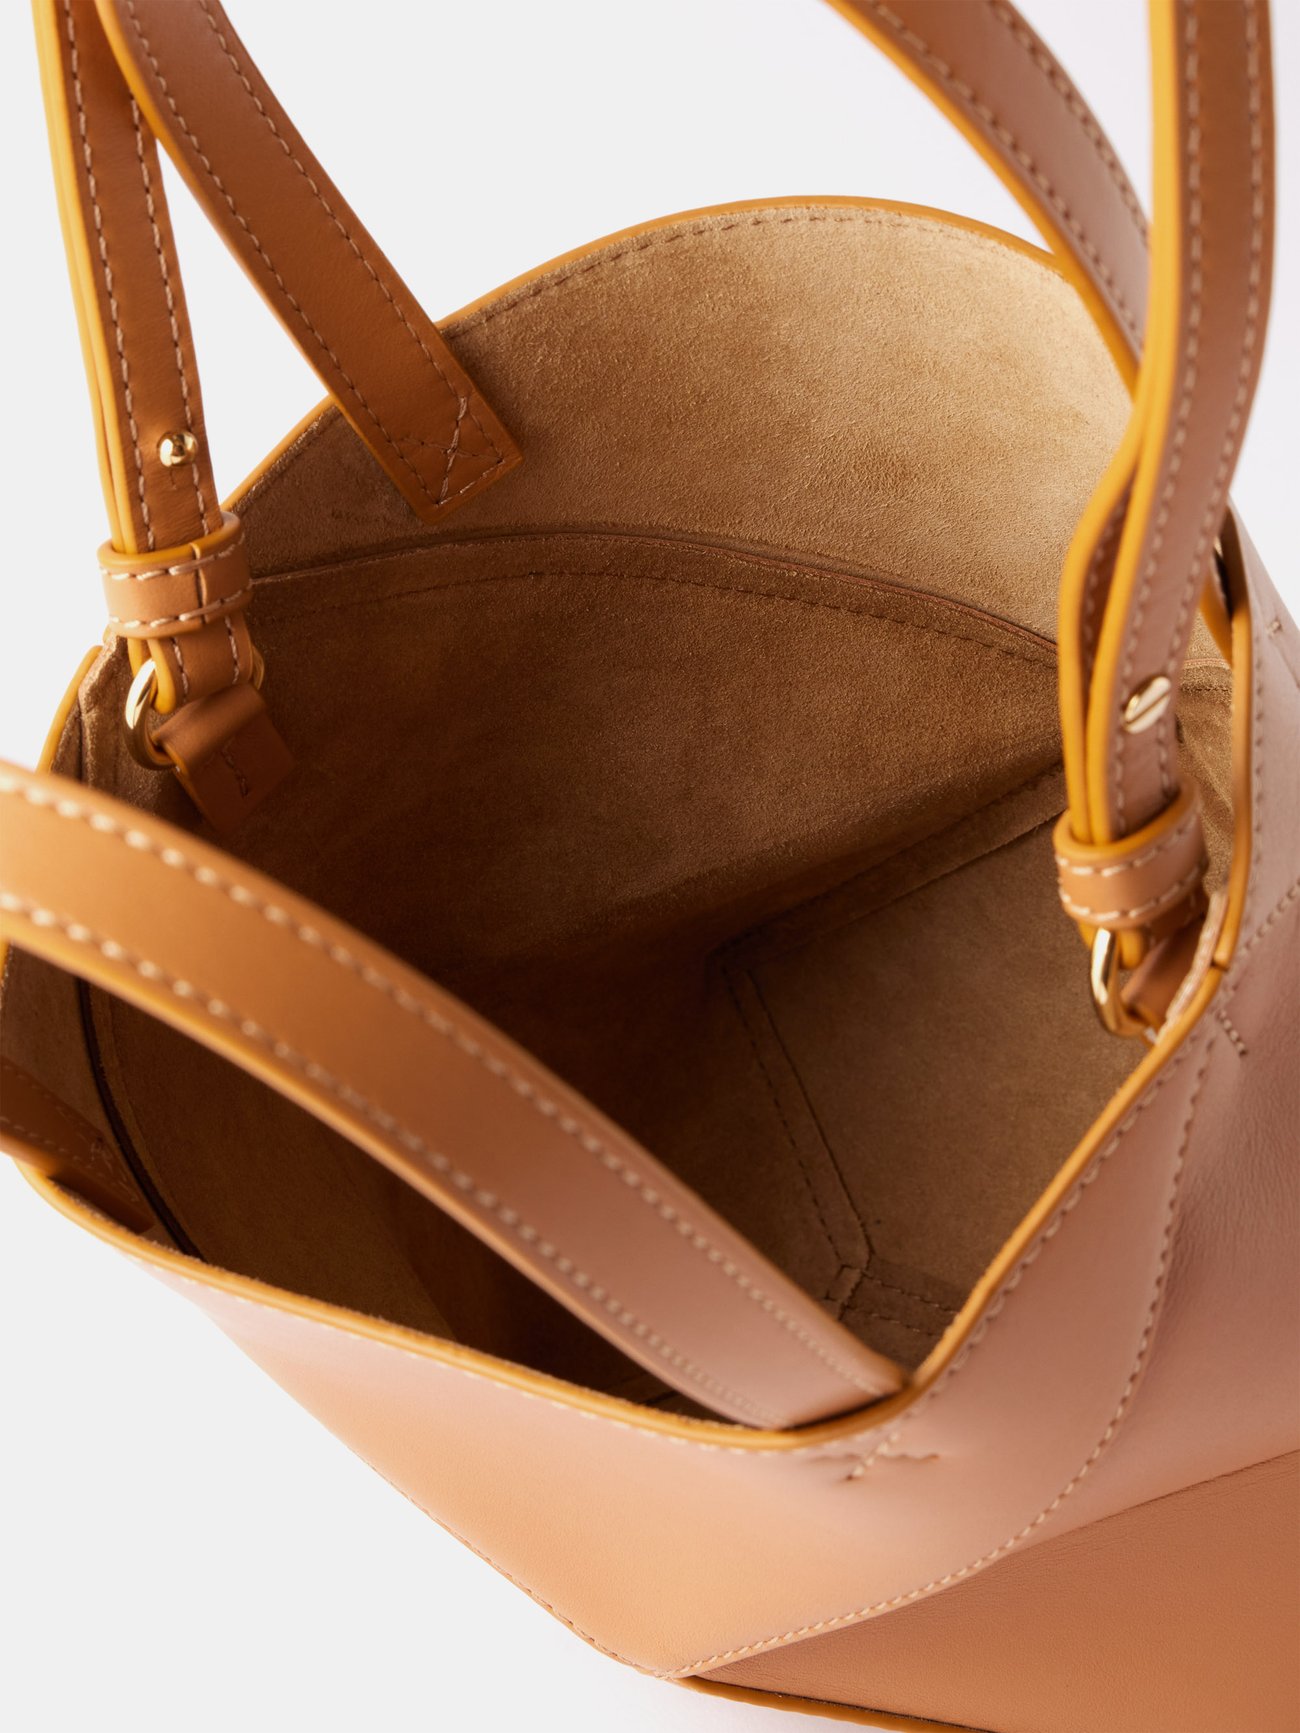 Aesther Ekme orange mini sac leather bag